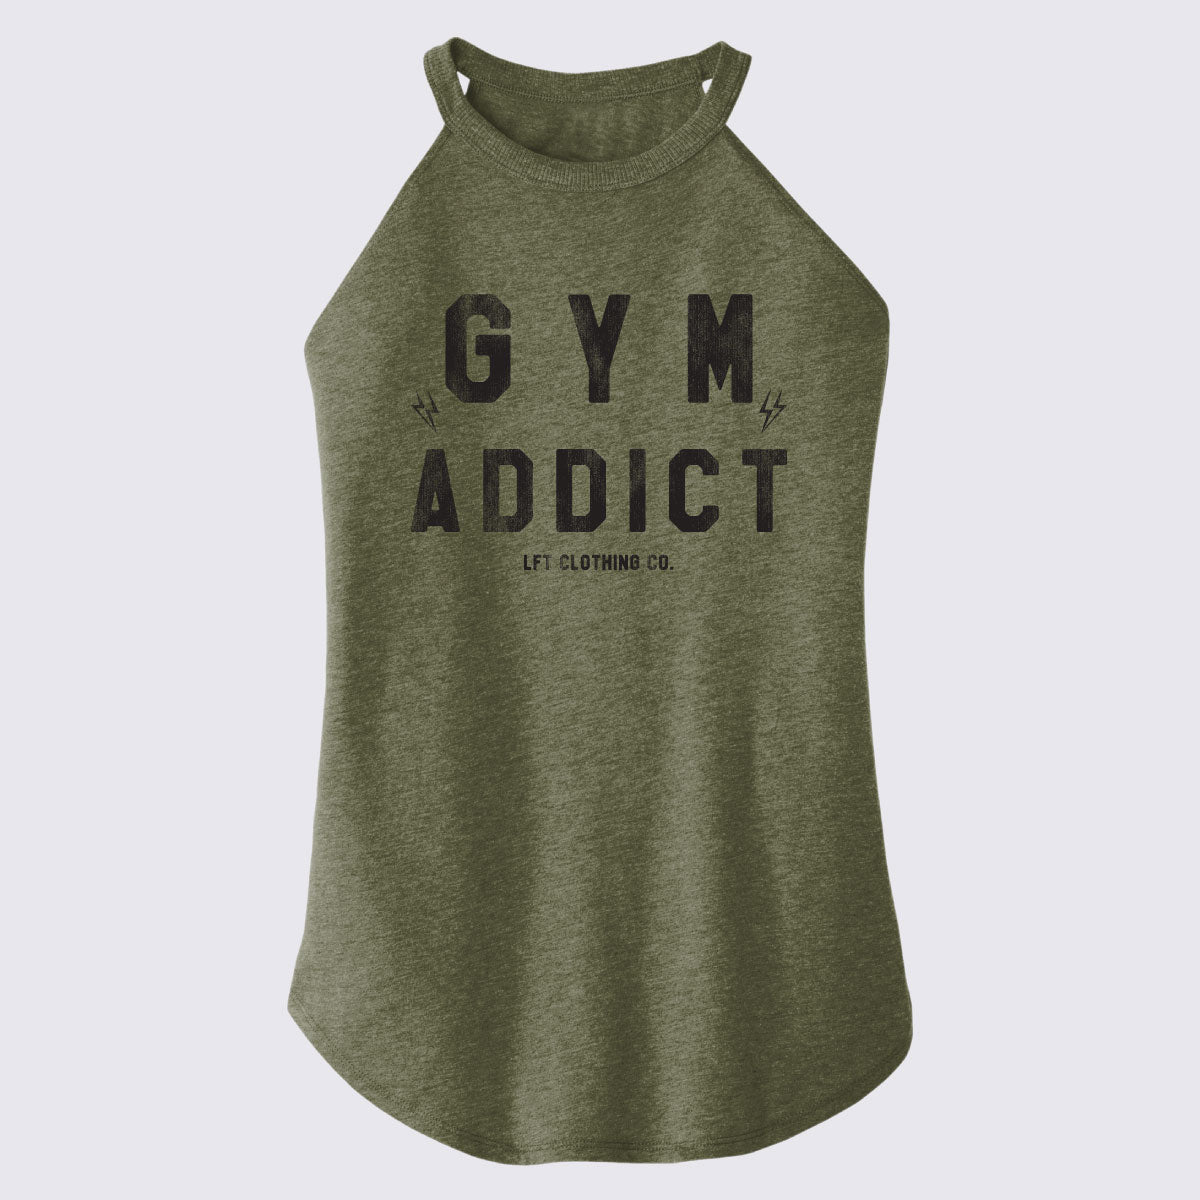 Gym Addict Women's Perfect Tri® Rocker Tank - The LFT Clothing Company